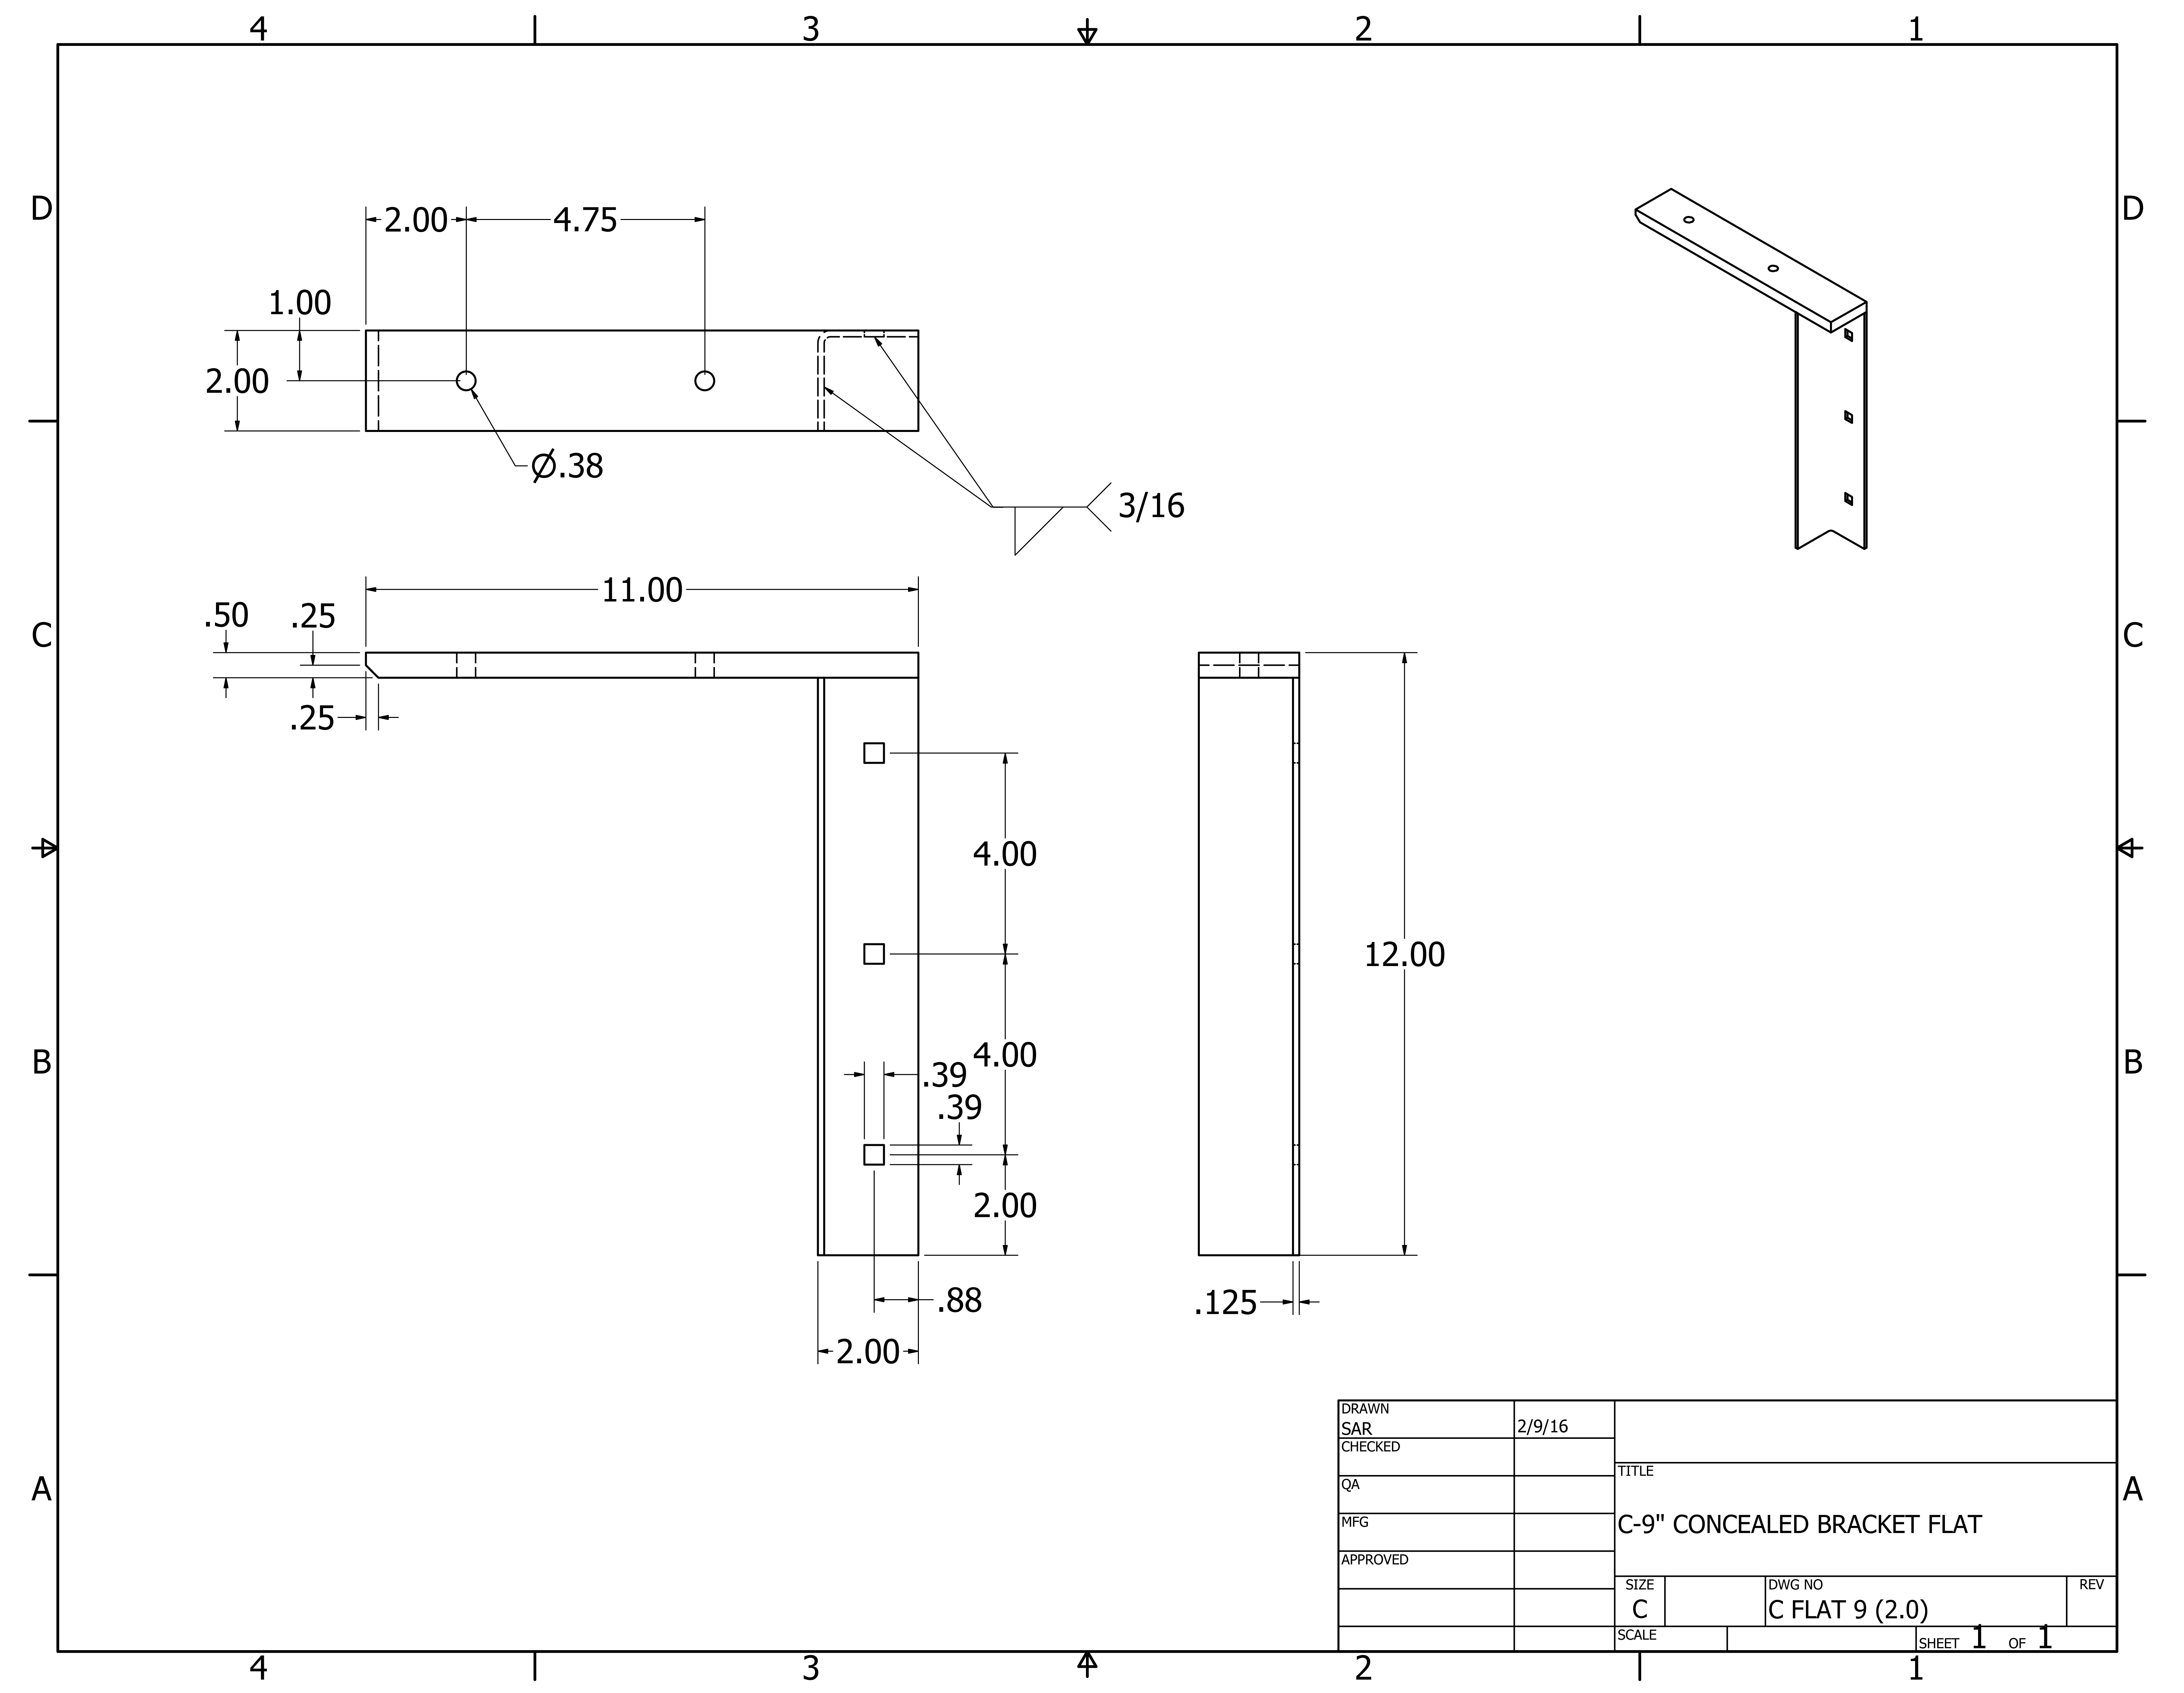 CFLAT9 (2.0) 2-D concealed flat bracket drawing